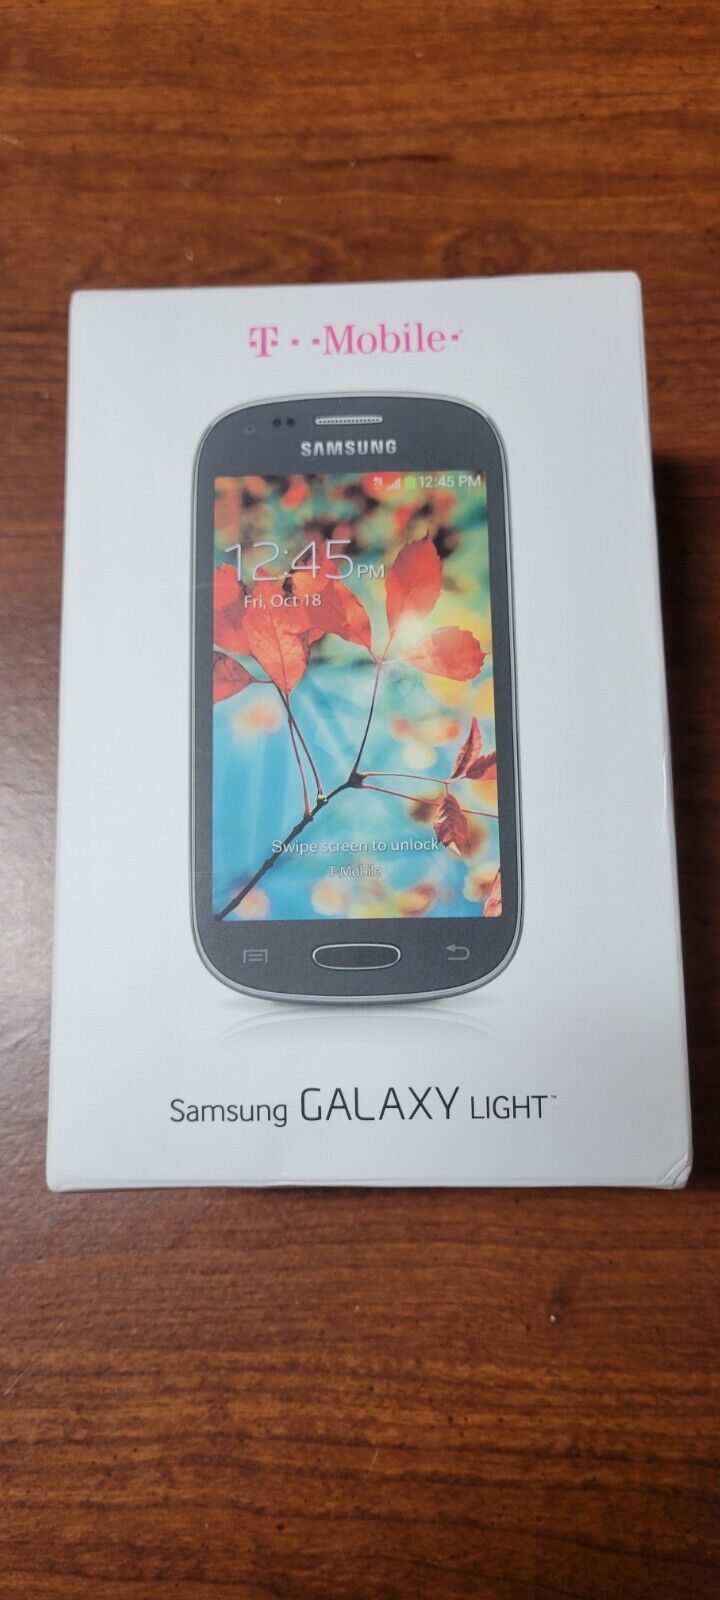 NEW - Samsung Galaxy Light SGH-T399N - 8 GB - Brown (T-Mobile) Smartphone